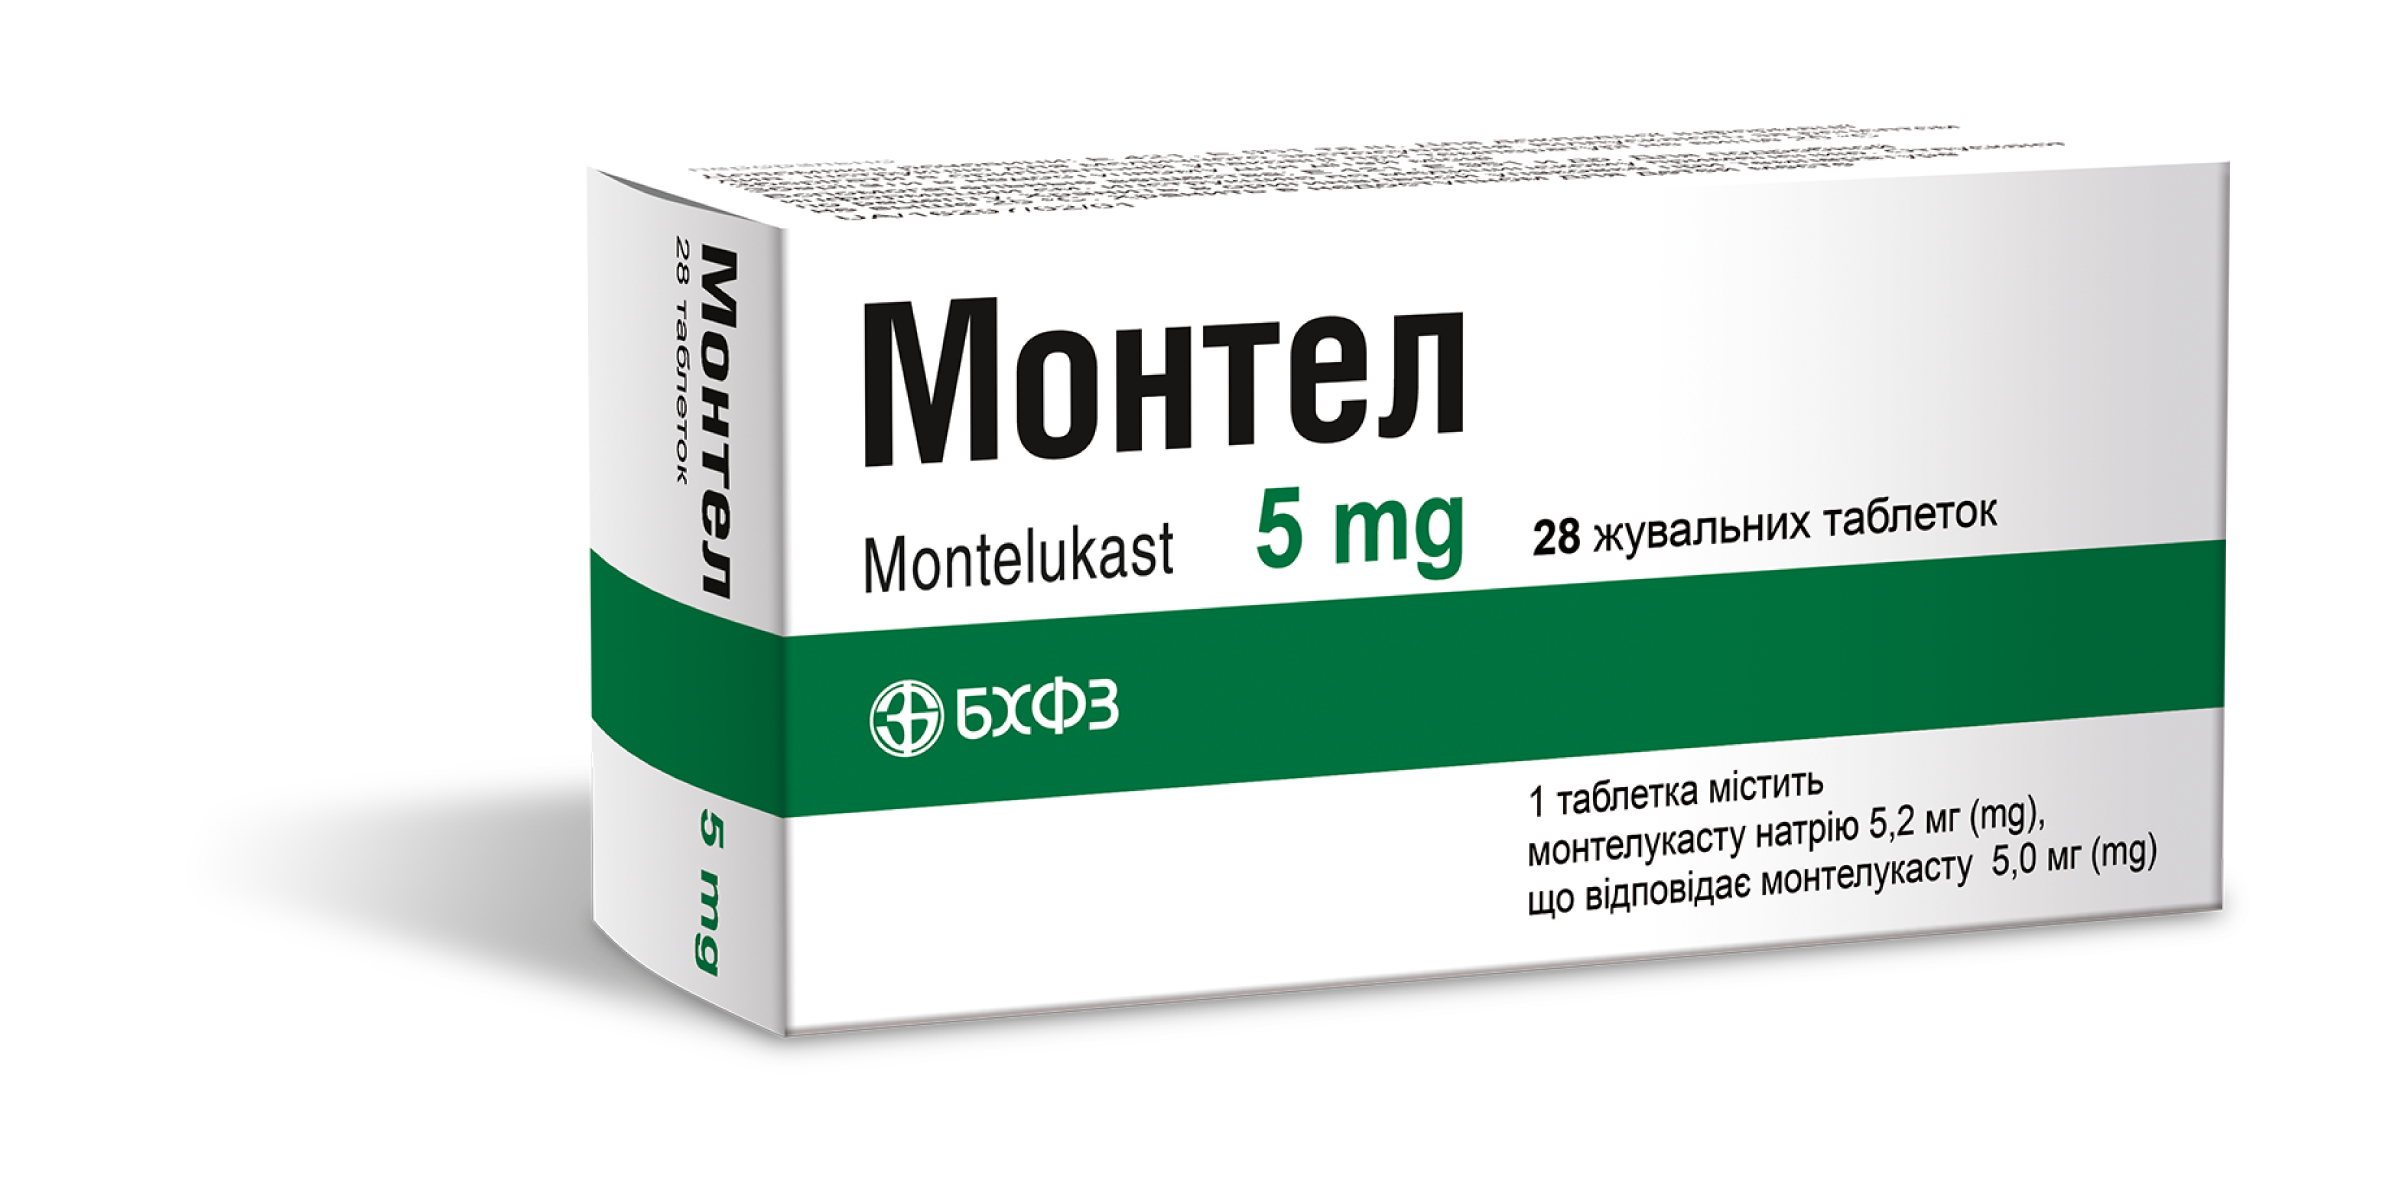 Montel (5 mg) Montelukast / R03D C03